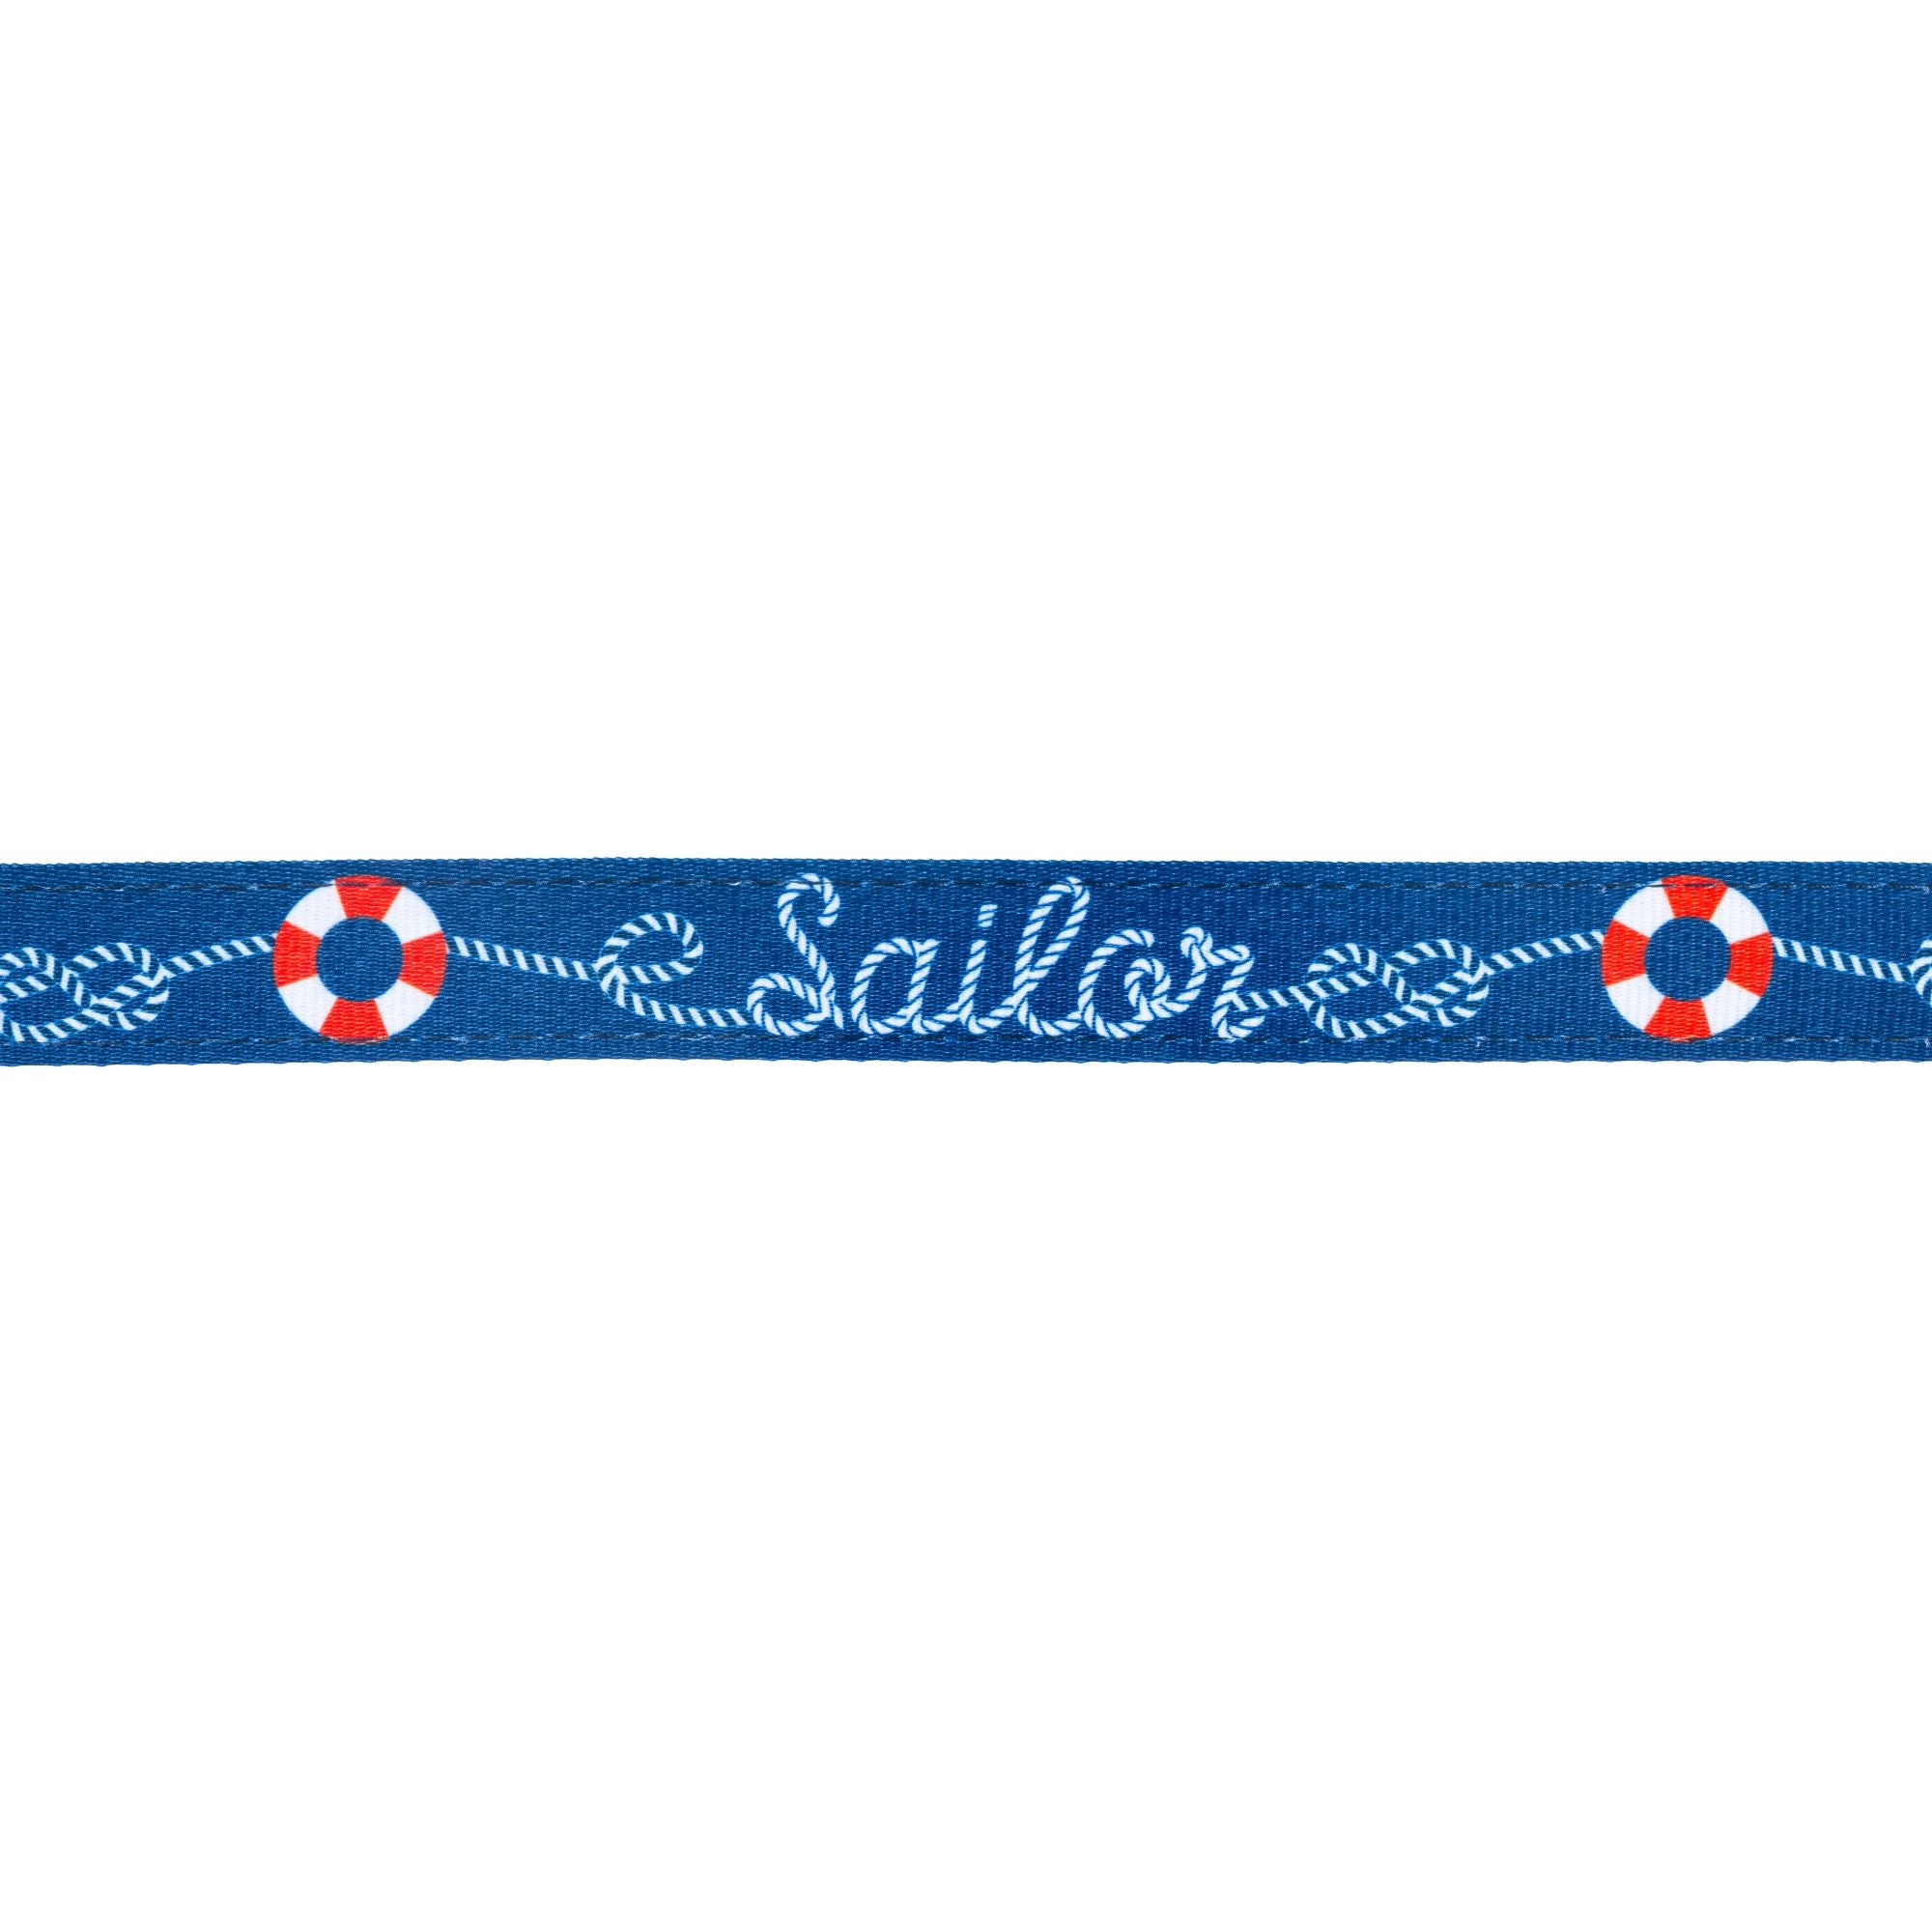 Kurzleine - Sailor